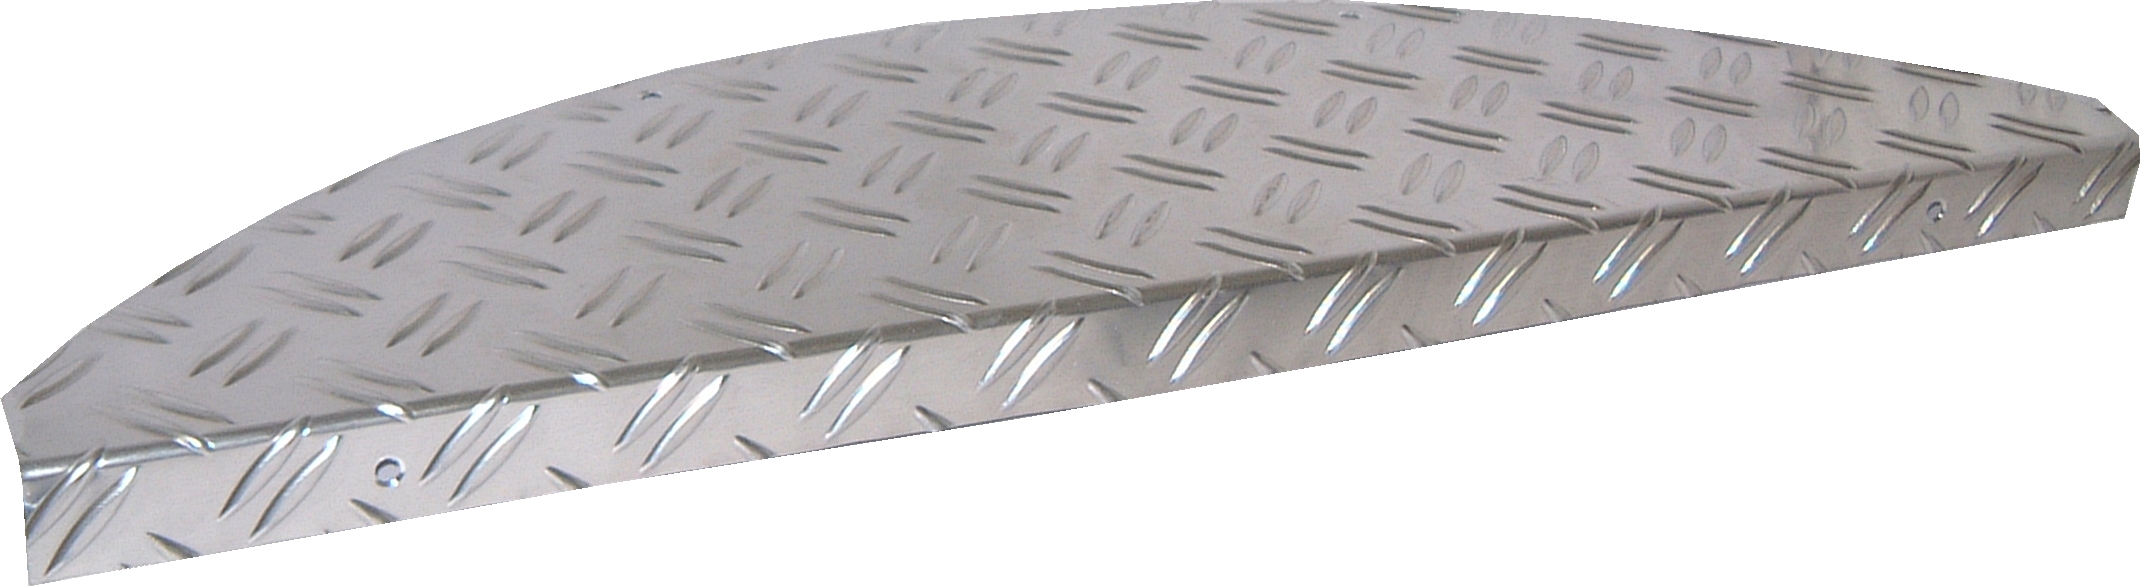 Doe mijn best Defilé tafereel Aluminium trapmat STOER 17.5 x 60 cm kopen bij Trapmatten-online.nl